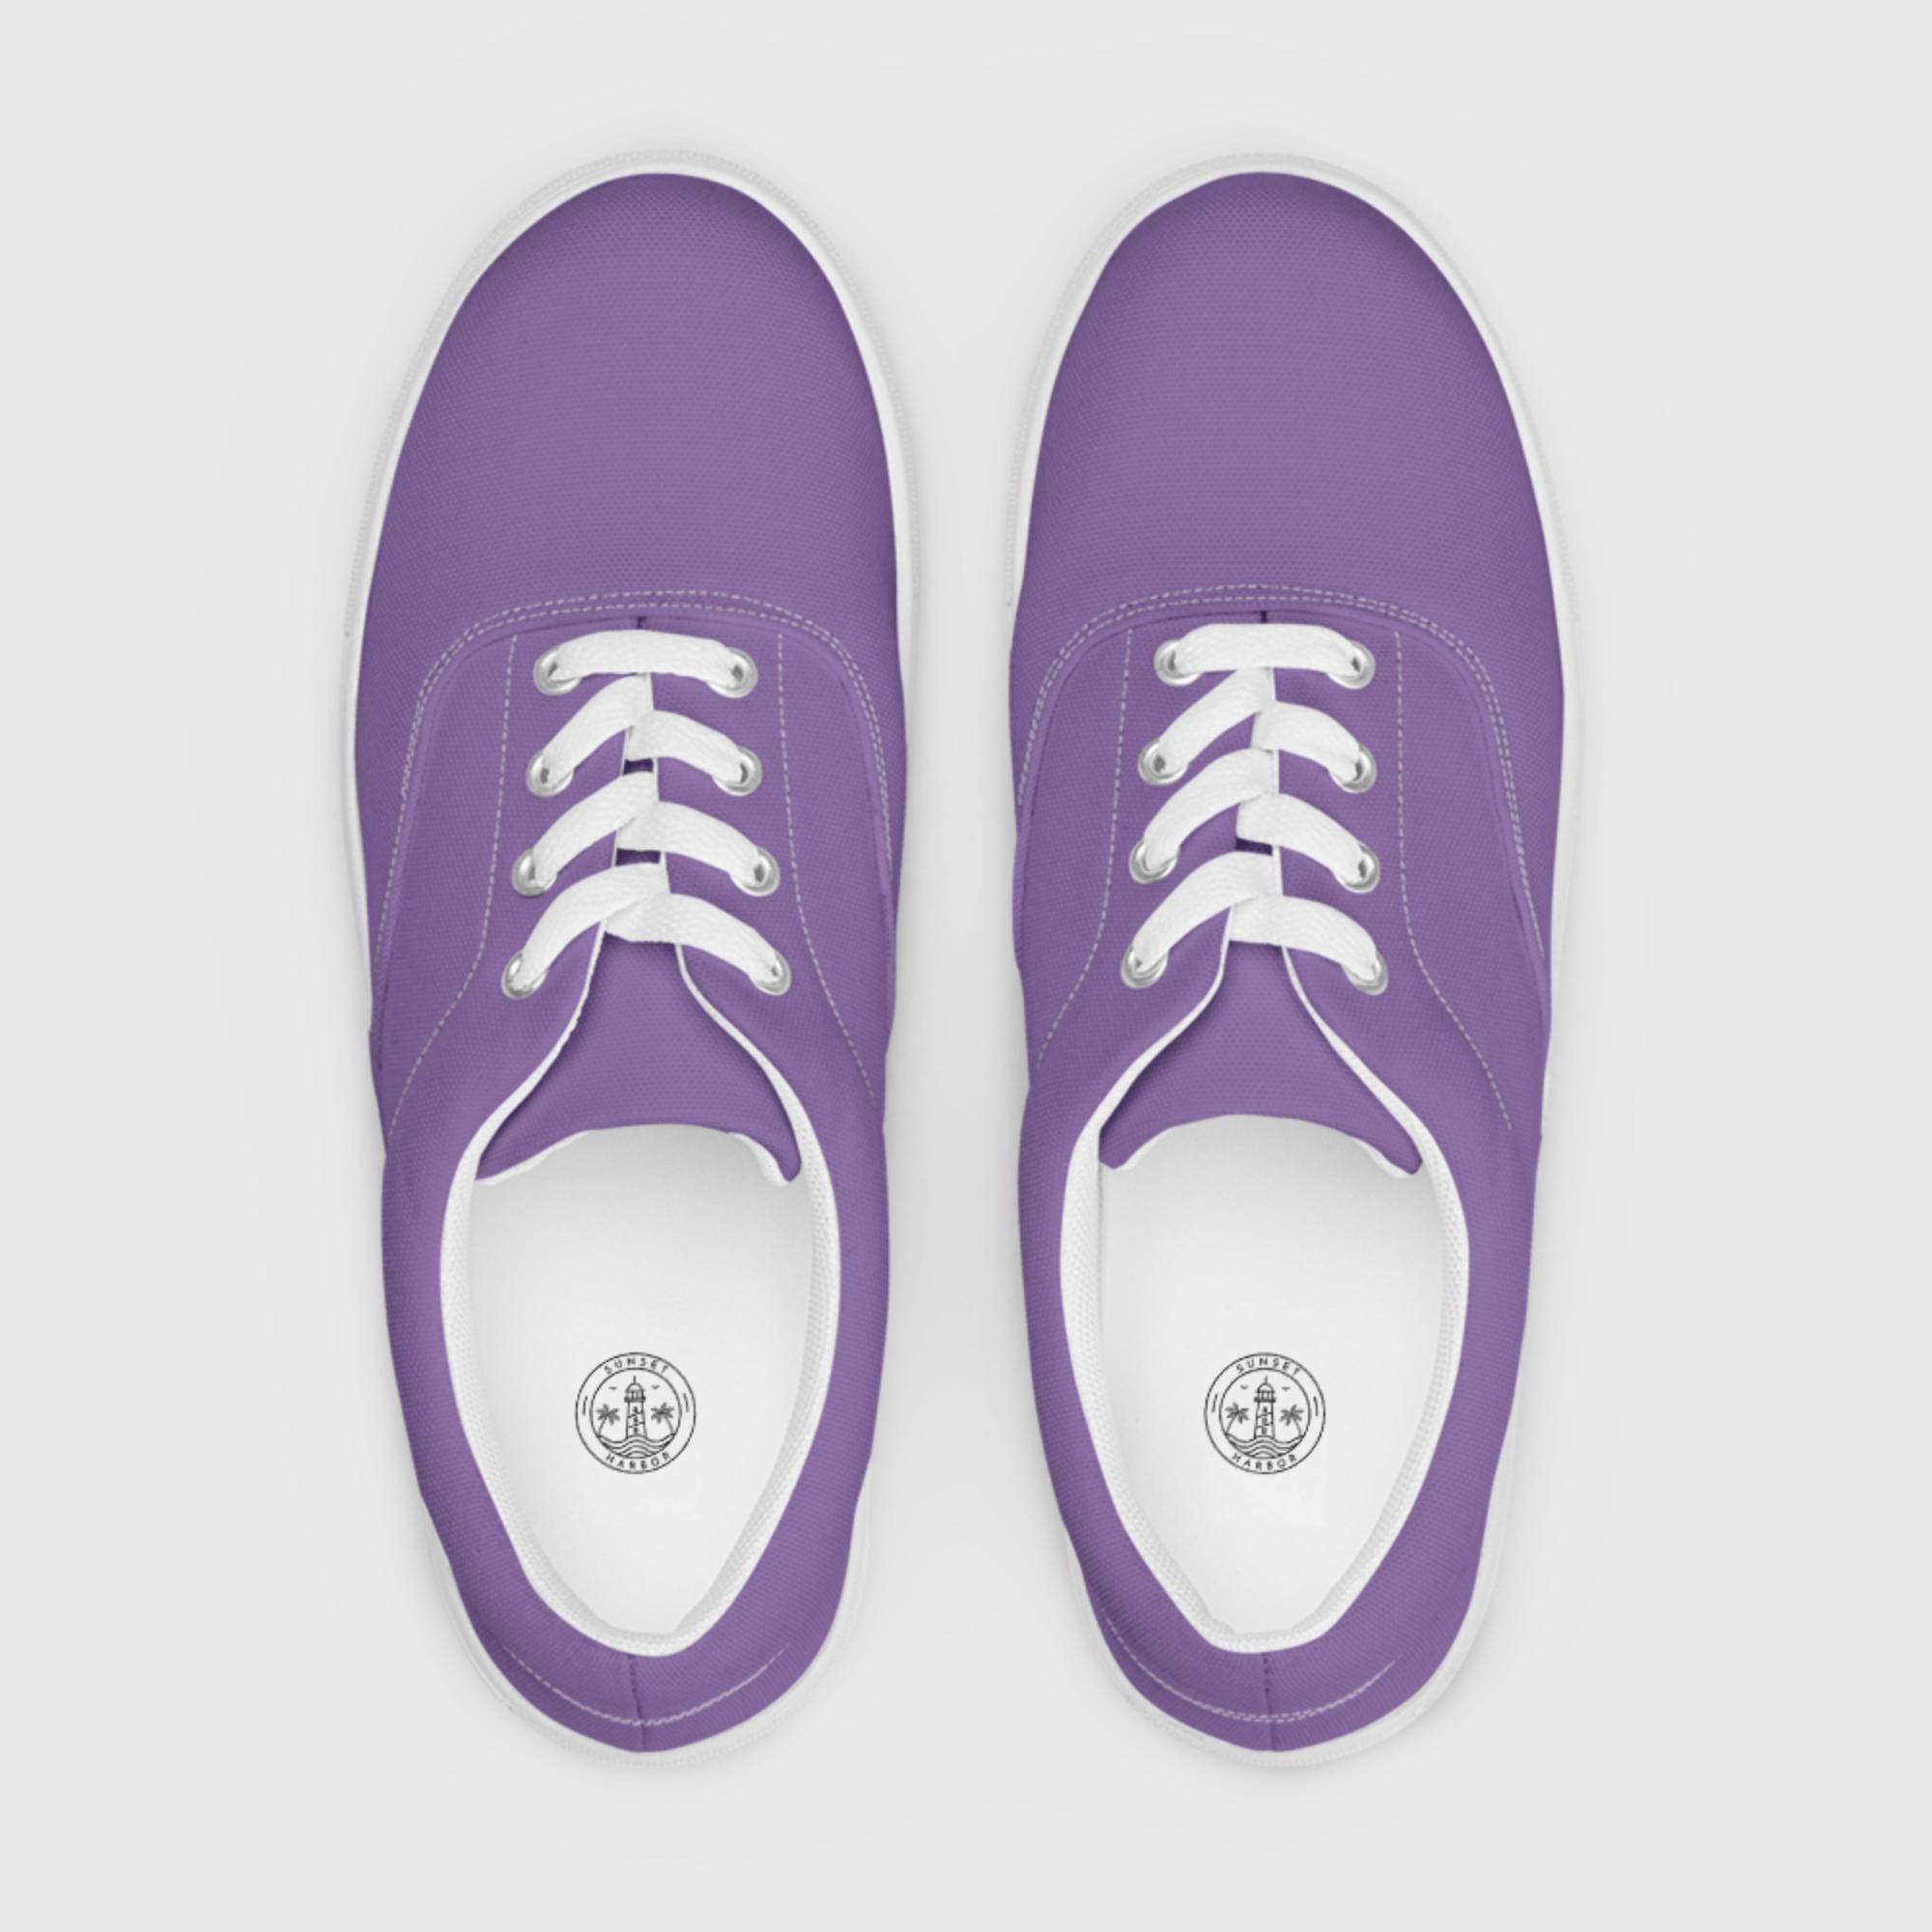 Women’s lace-up canvas shoes - Purple - Sunset Harbor Clothing